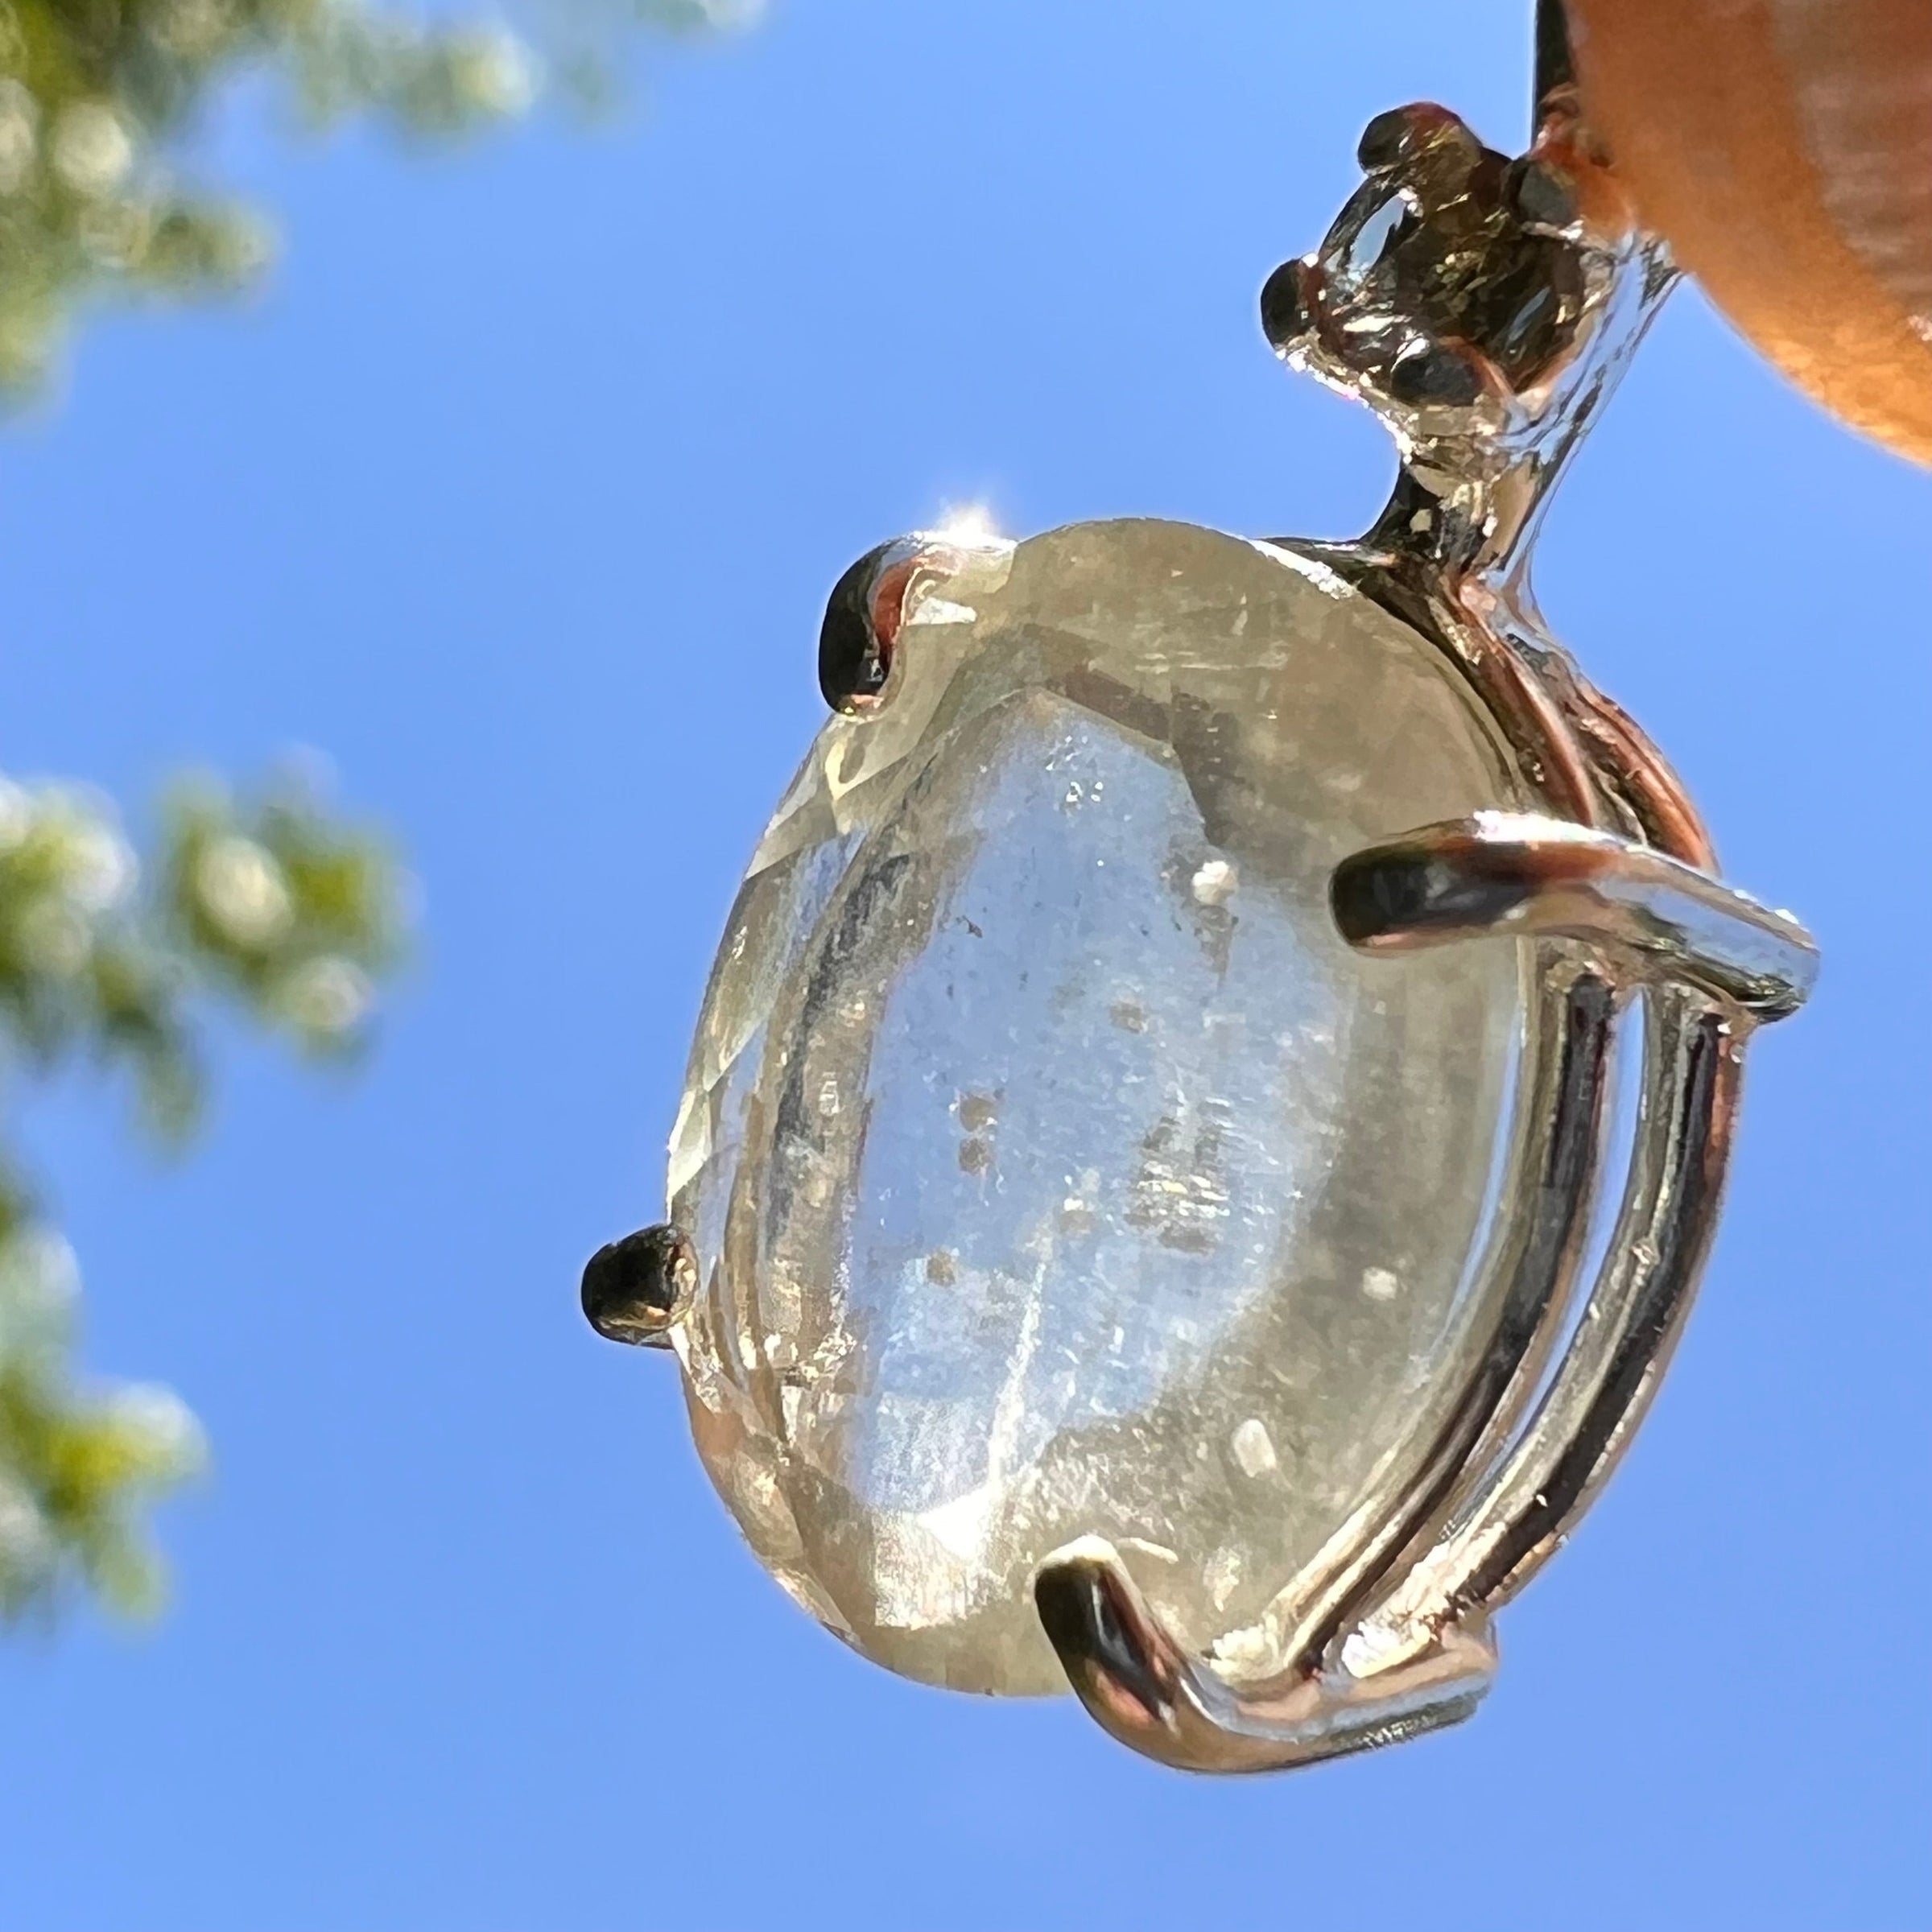 Libyan Desert Glass & Moldavite Necklace Sterling #5194-Moldavite Life